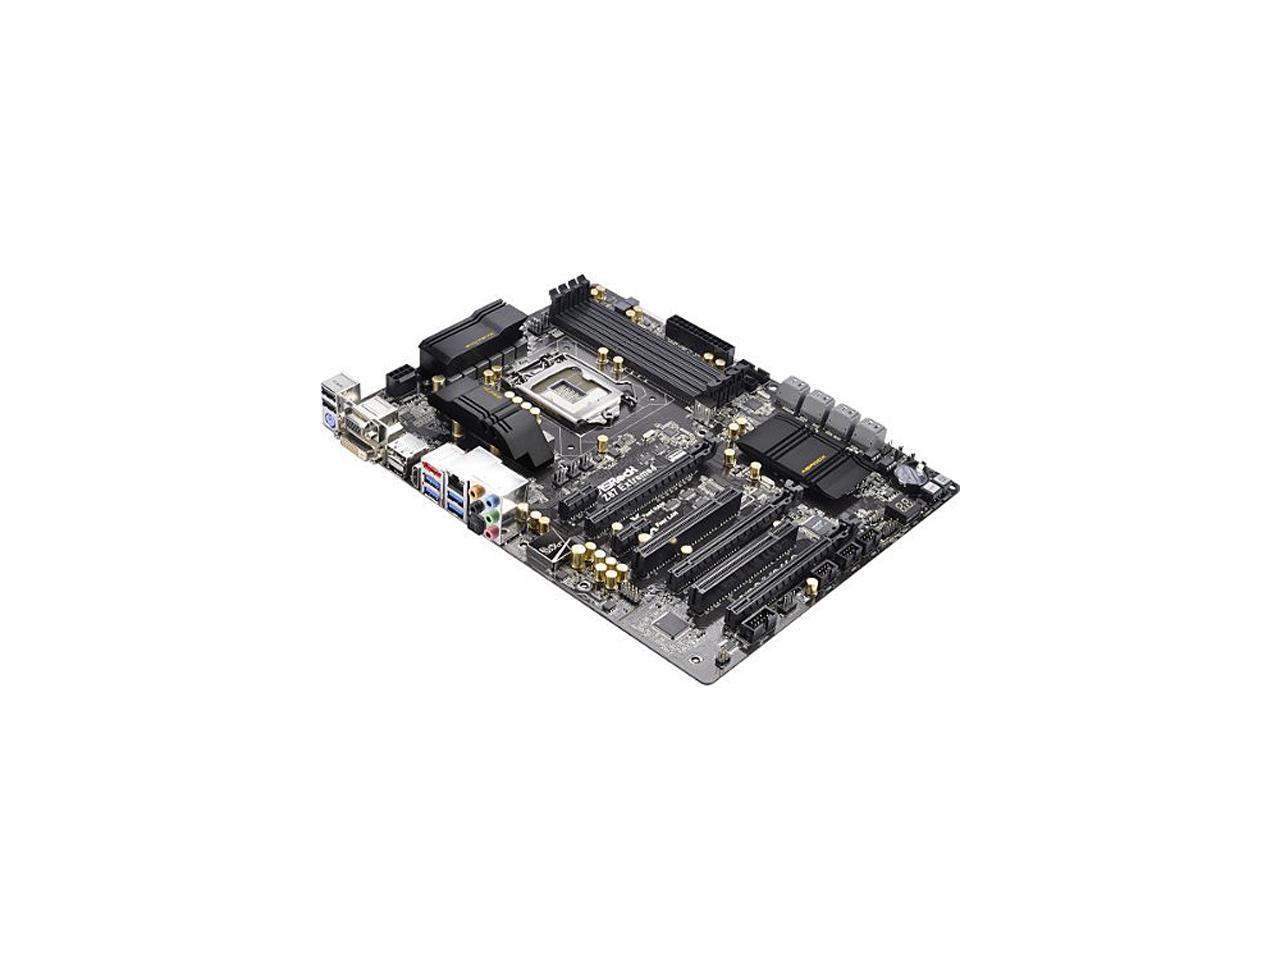 ASRock Z87 Extreme4 LGA 1150 Intel Z87 HDMI SATA 6Gb/s USB 3.0 ATX Intel Motherboard